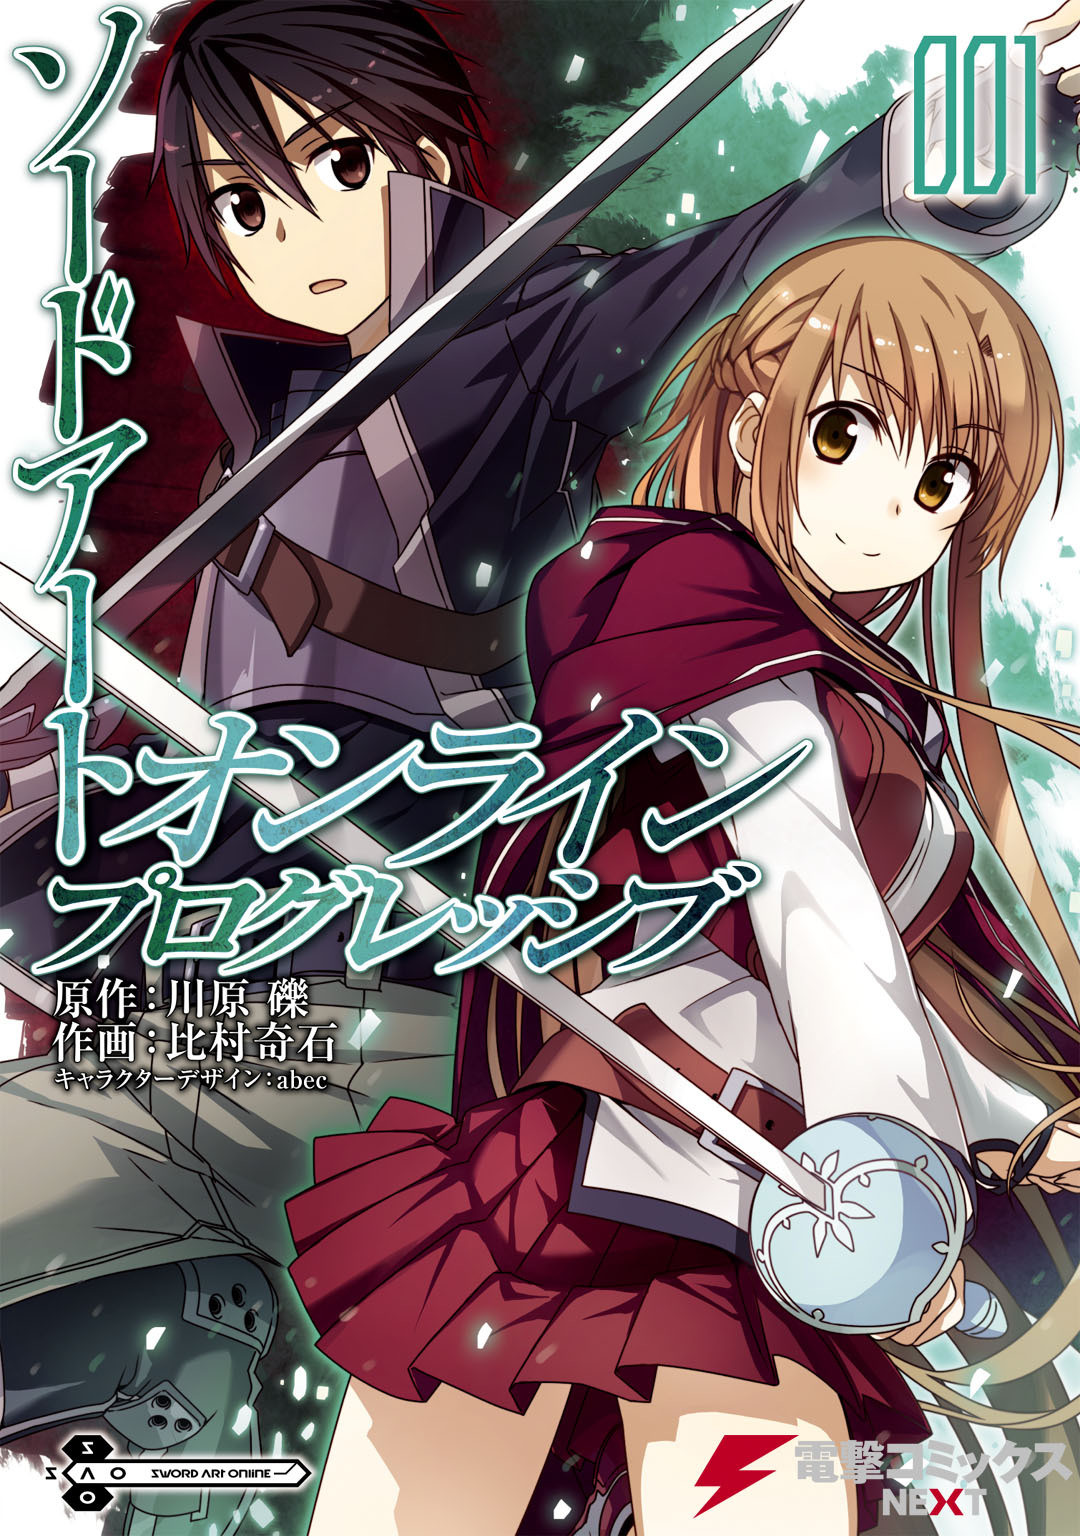 Sword Art Online Volume 01 (manga). Sword Art Online